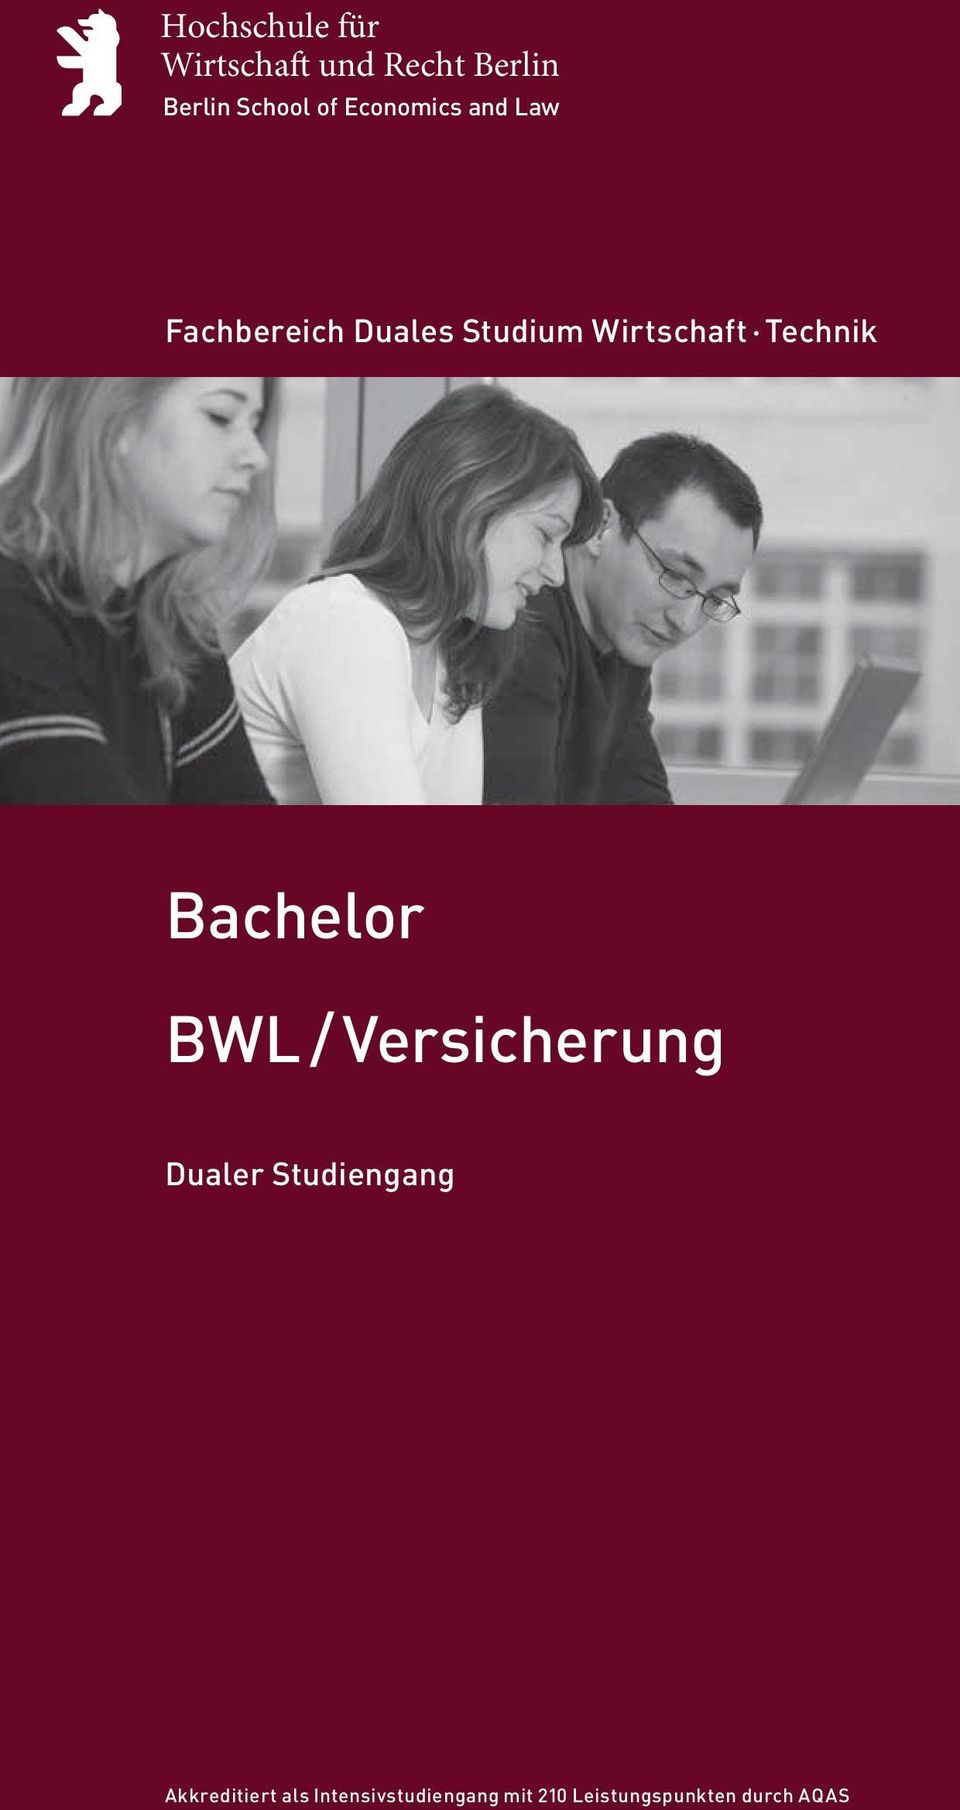 Technik Bachelor BWL / Versicherung Dualer Studiengang